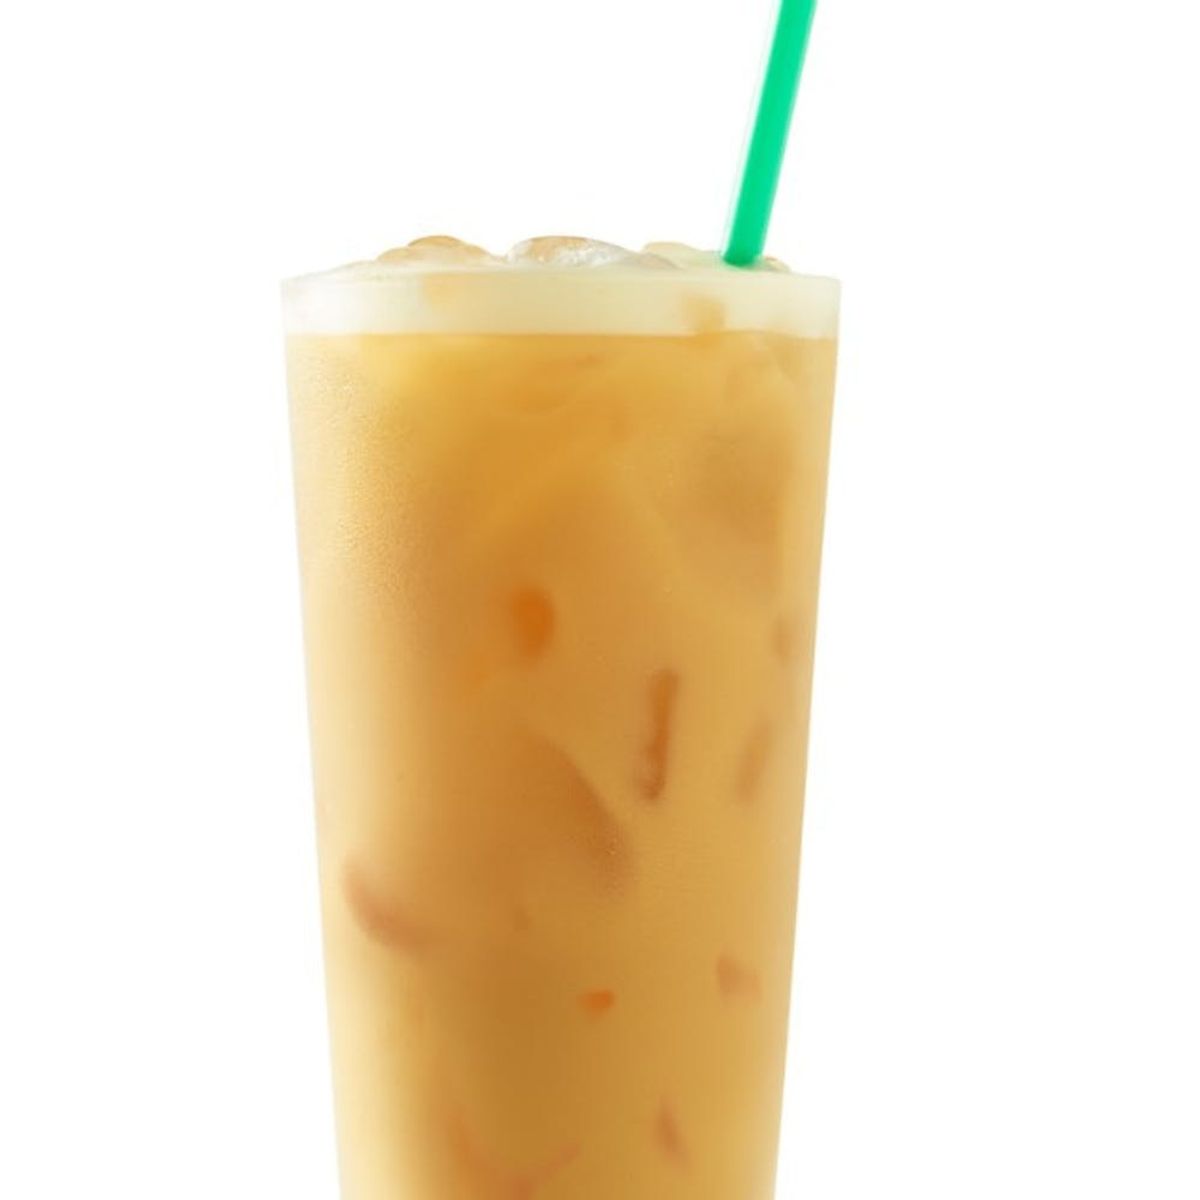 Starbucks Just Debuted an Iced Piña Colada Tea Infusion